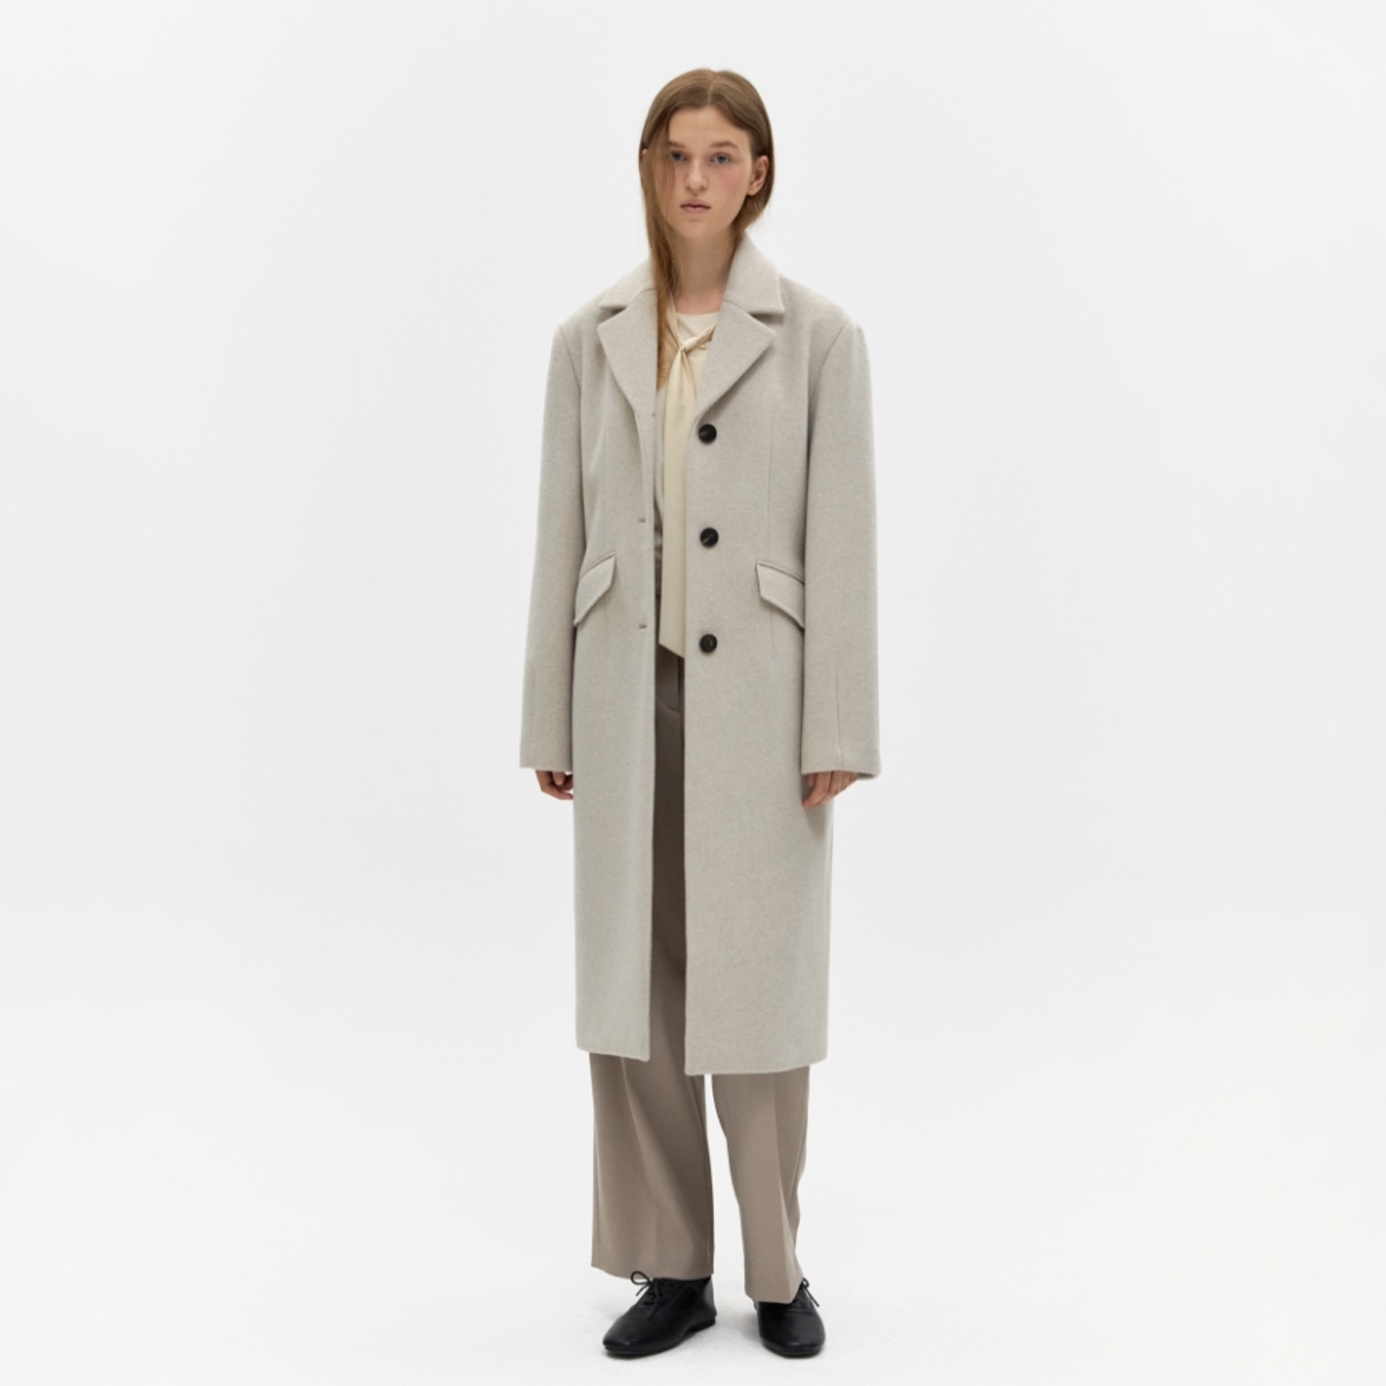 depound-cashmere single coat - melange beige